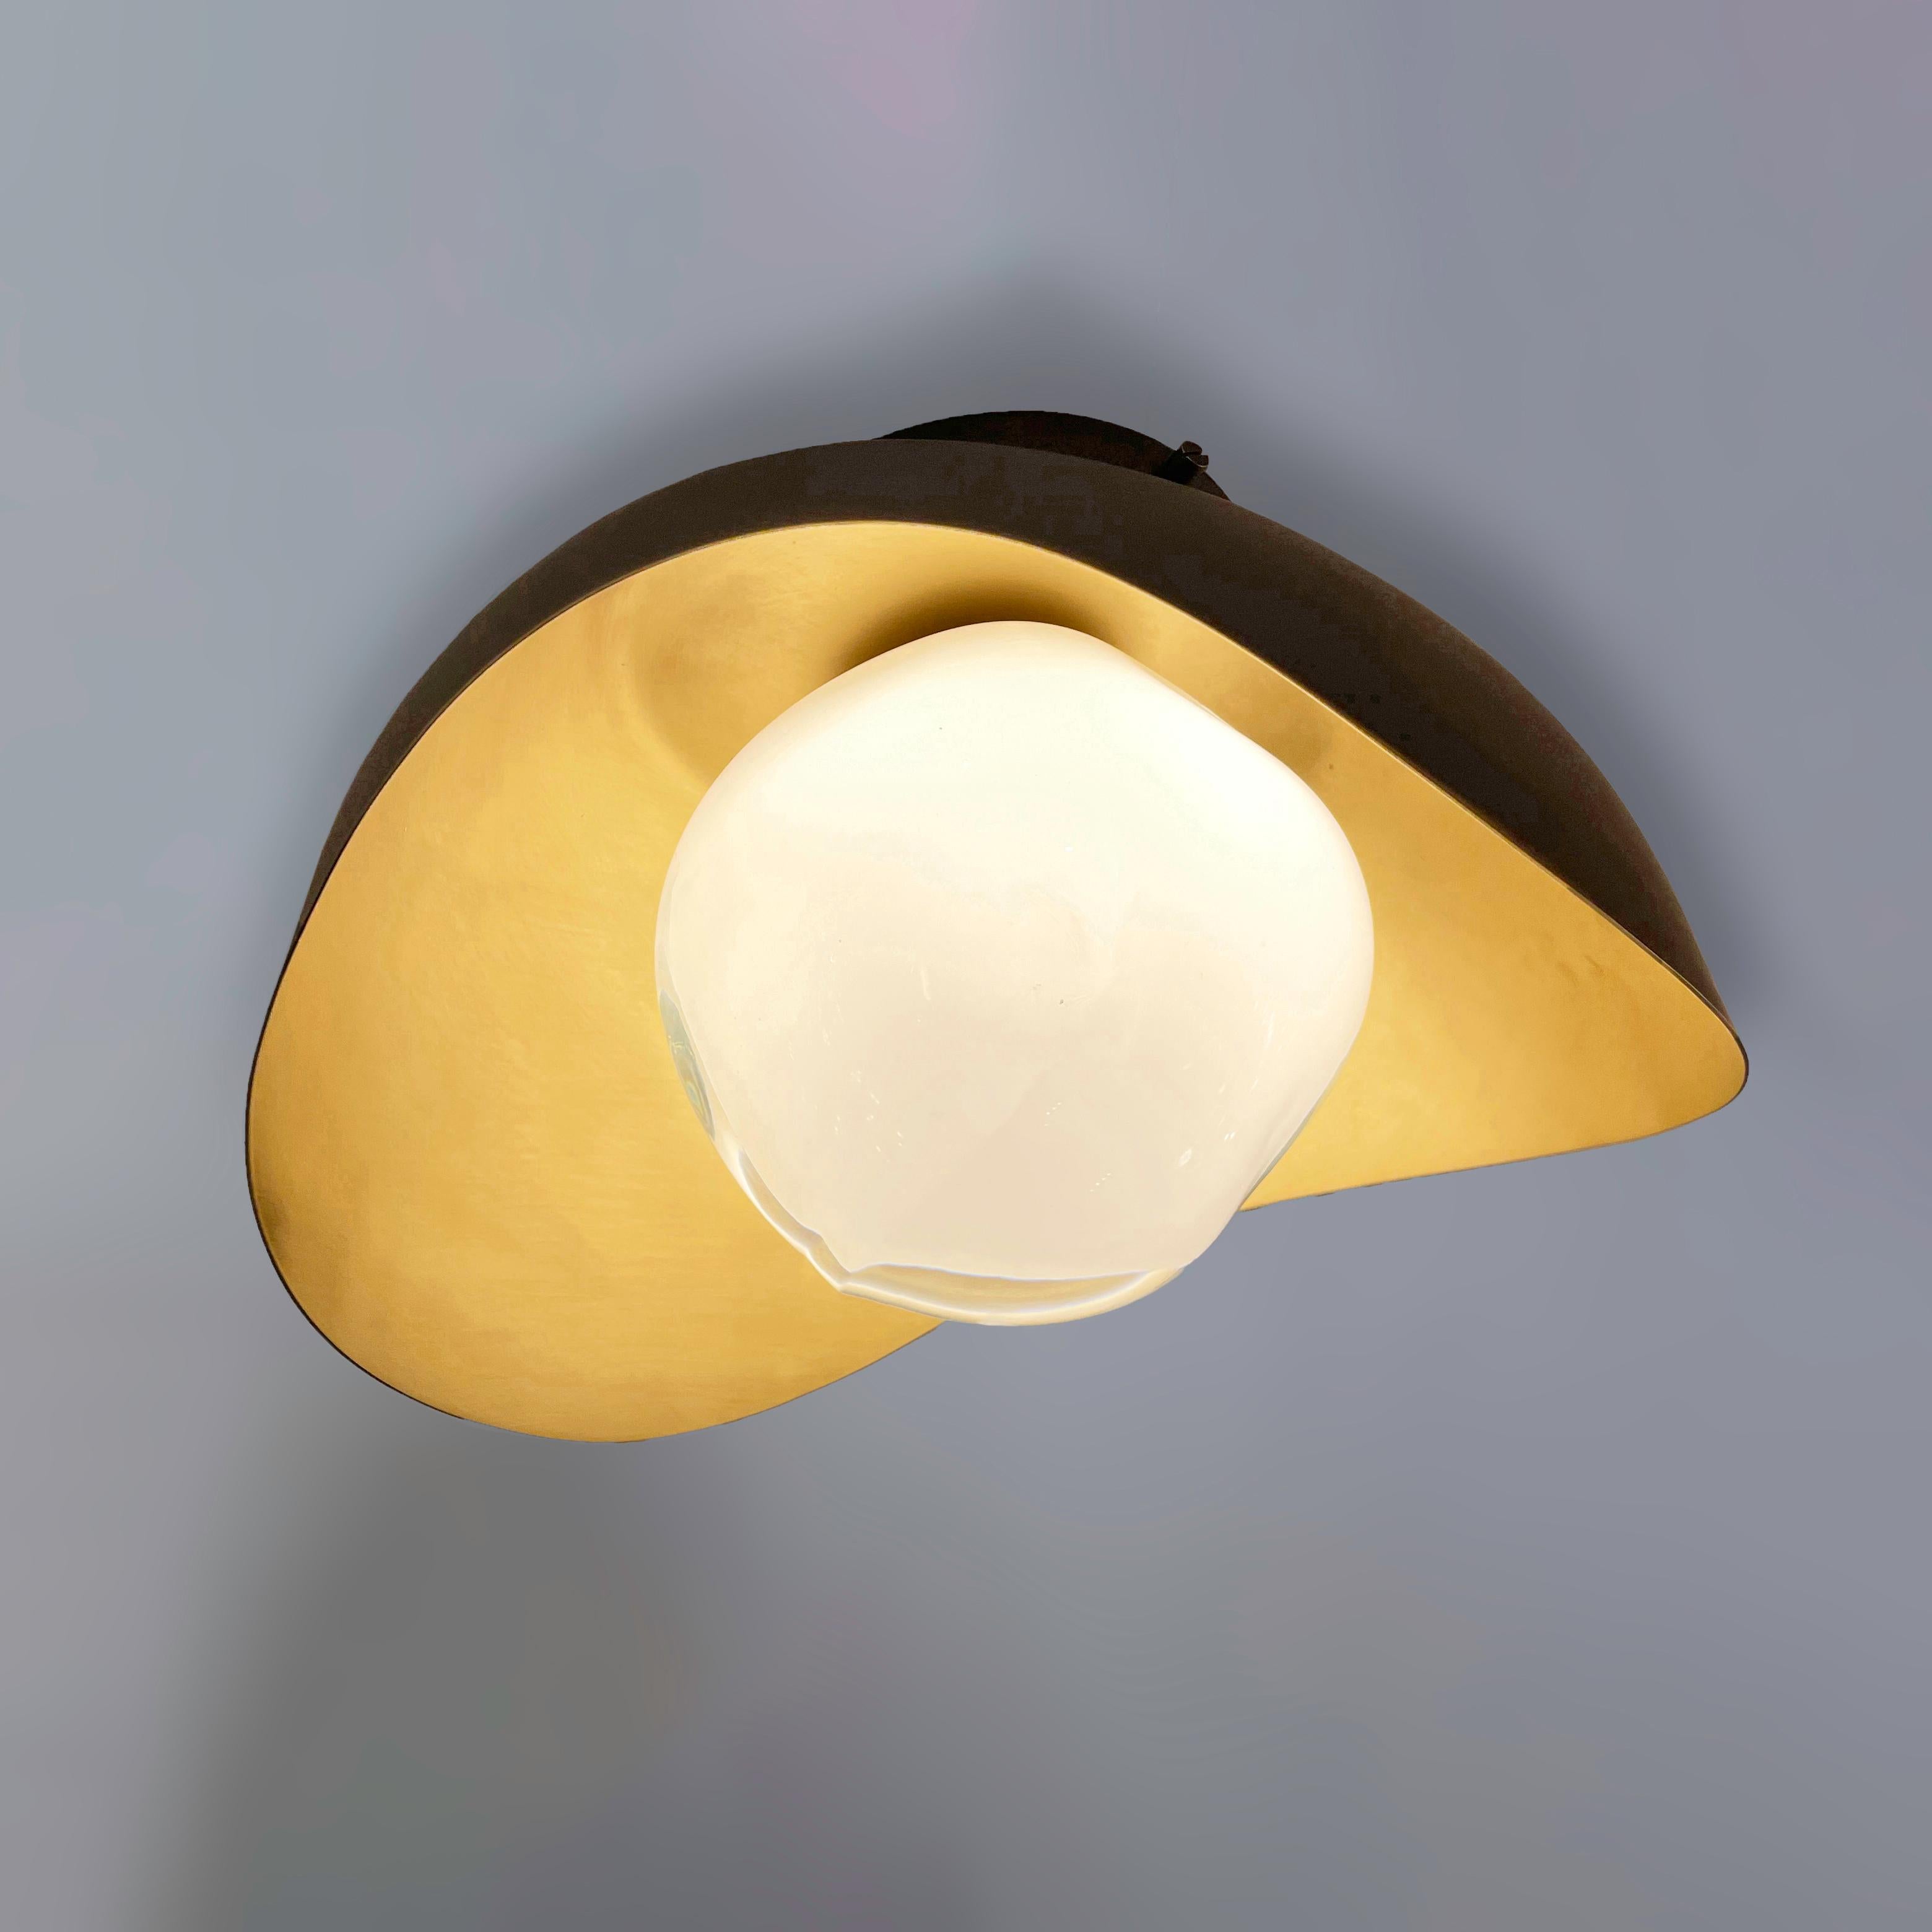 Organic Modern Perla Flushmount Ceiling Light by Gaspare Asaro-Satin Brass/Bronze Finish. For Sale